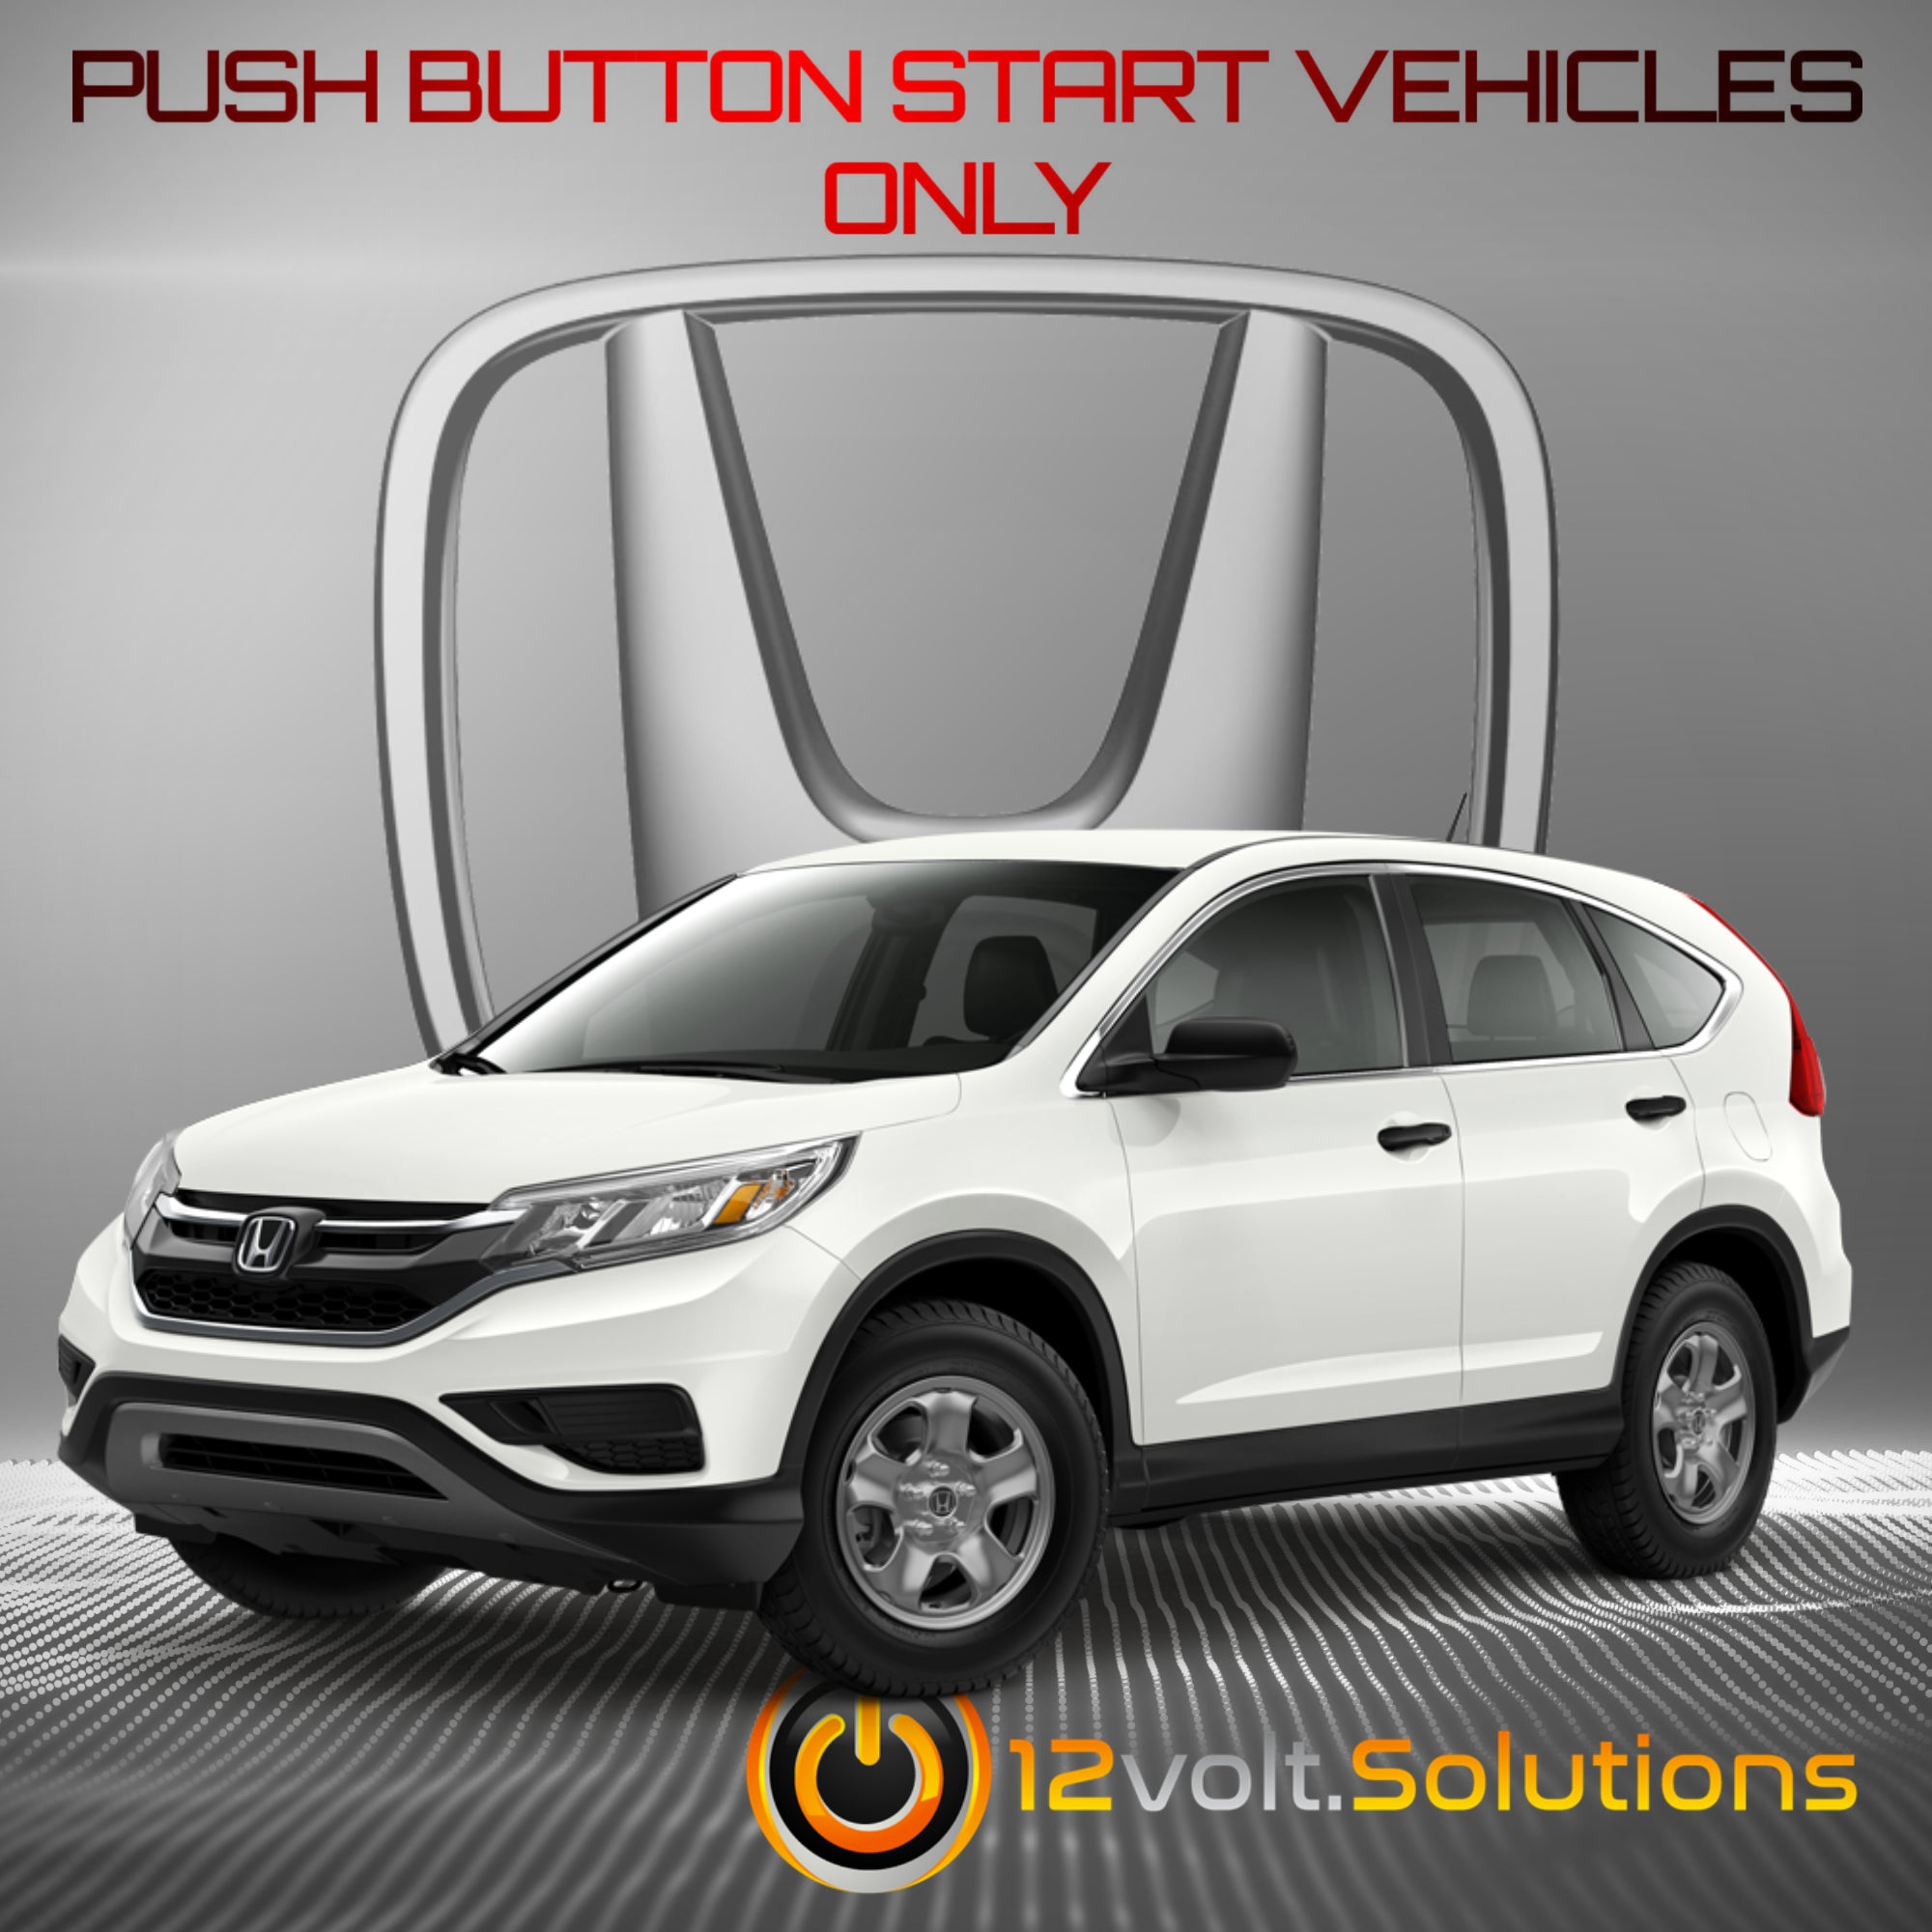 2015-2016 Honda CR-V Plug & Play Remote Start Kit (Push Button Start)-12Volt.Solutions